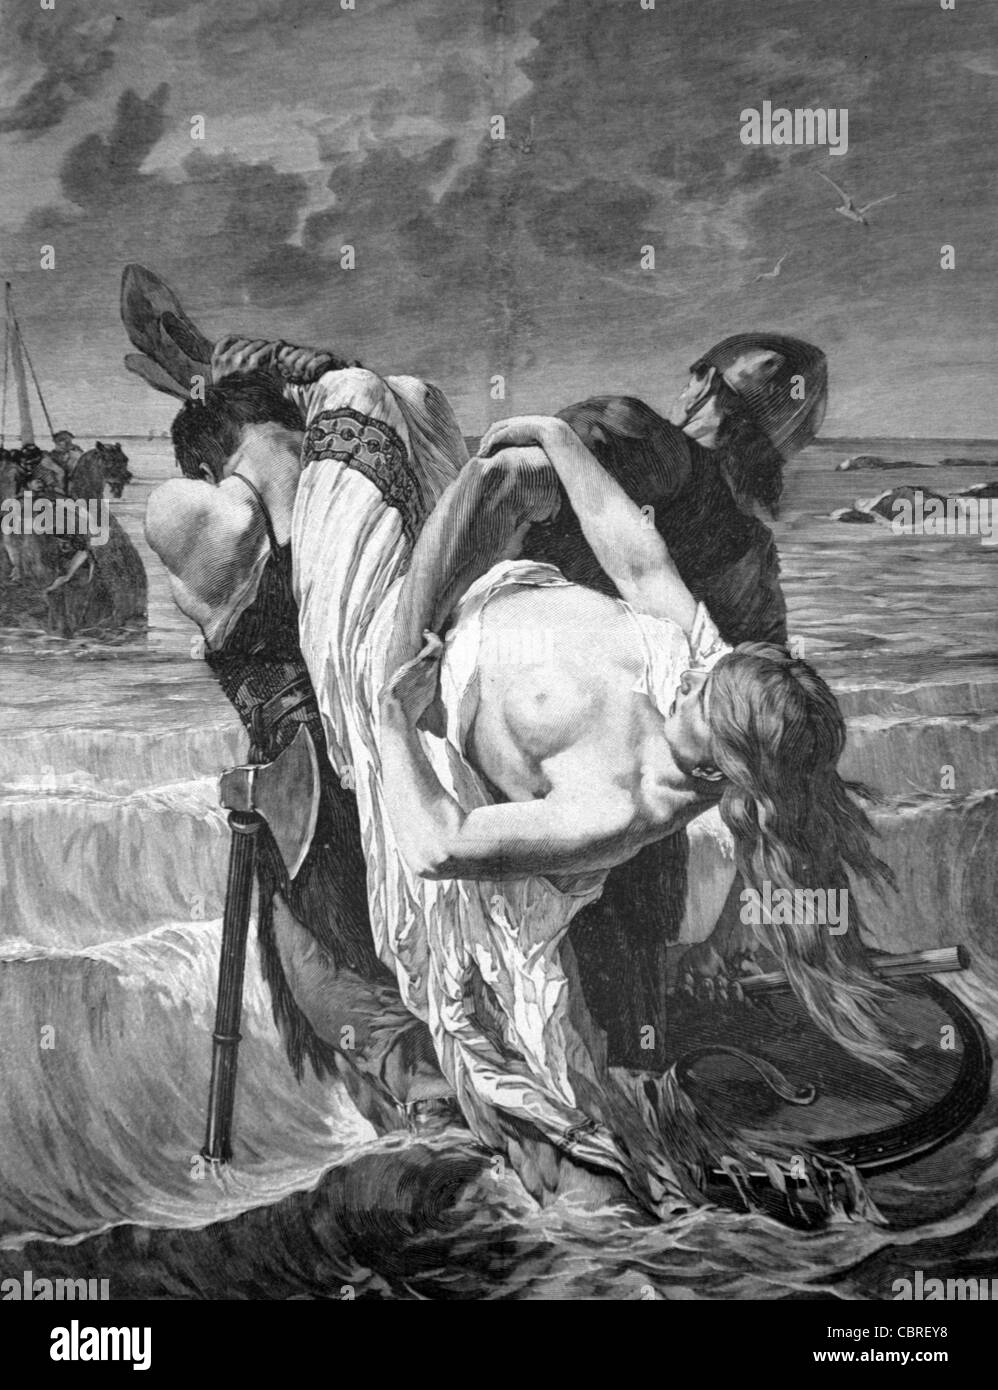 Norman Pirates Kidnapping Women as Spoils of war, c19th Engraving oder Vintage Illustration Stockfoto